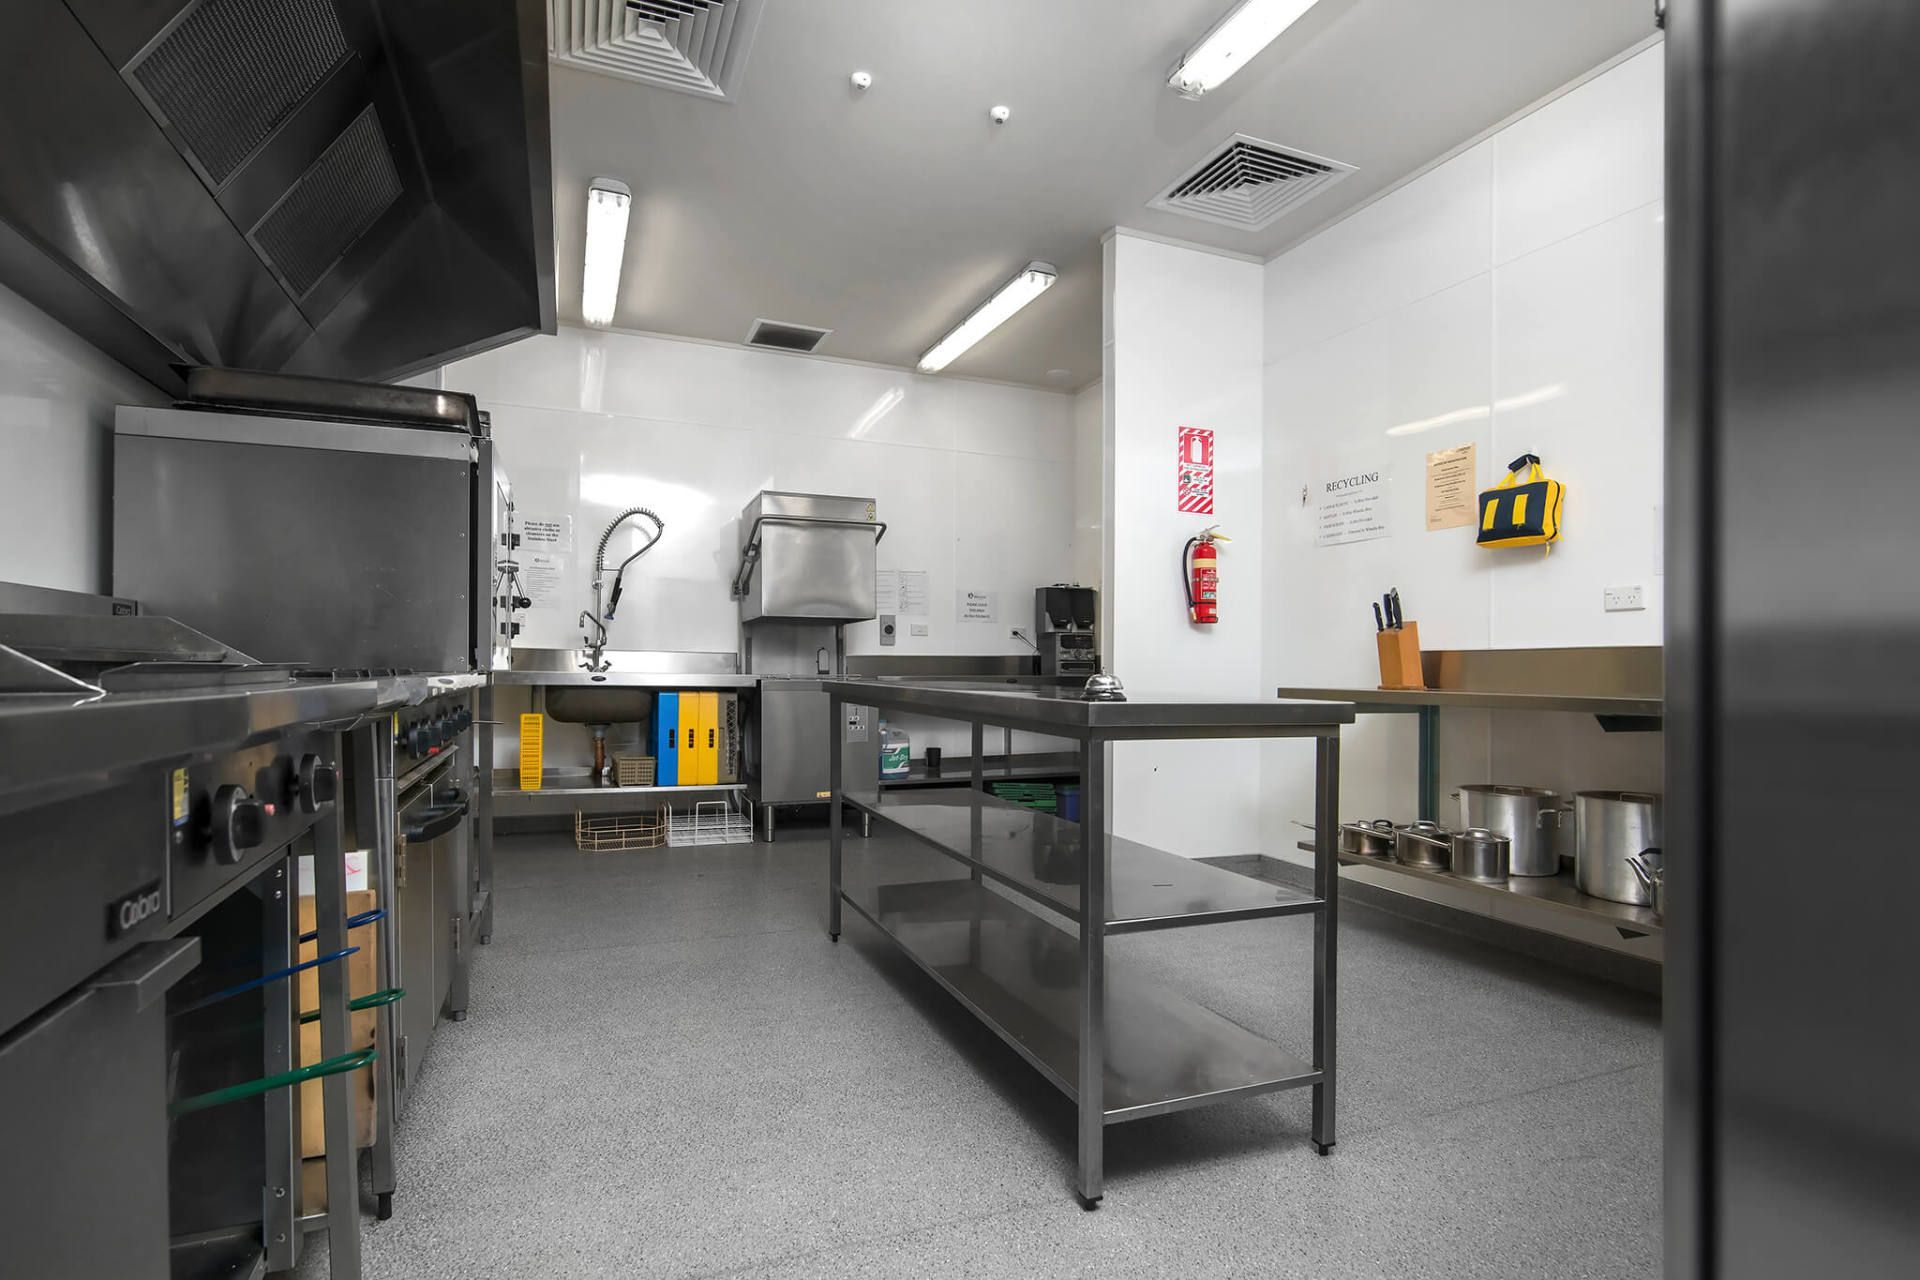 The Commercial Kitchen at Endeavour Park Pavilion in Picton